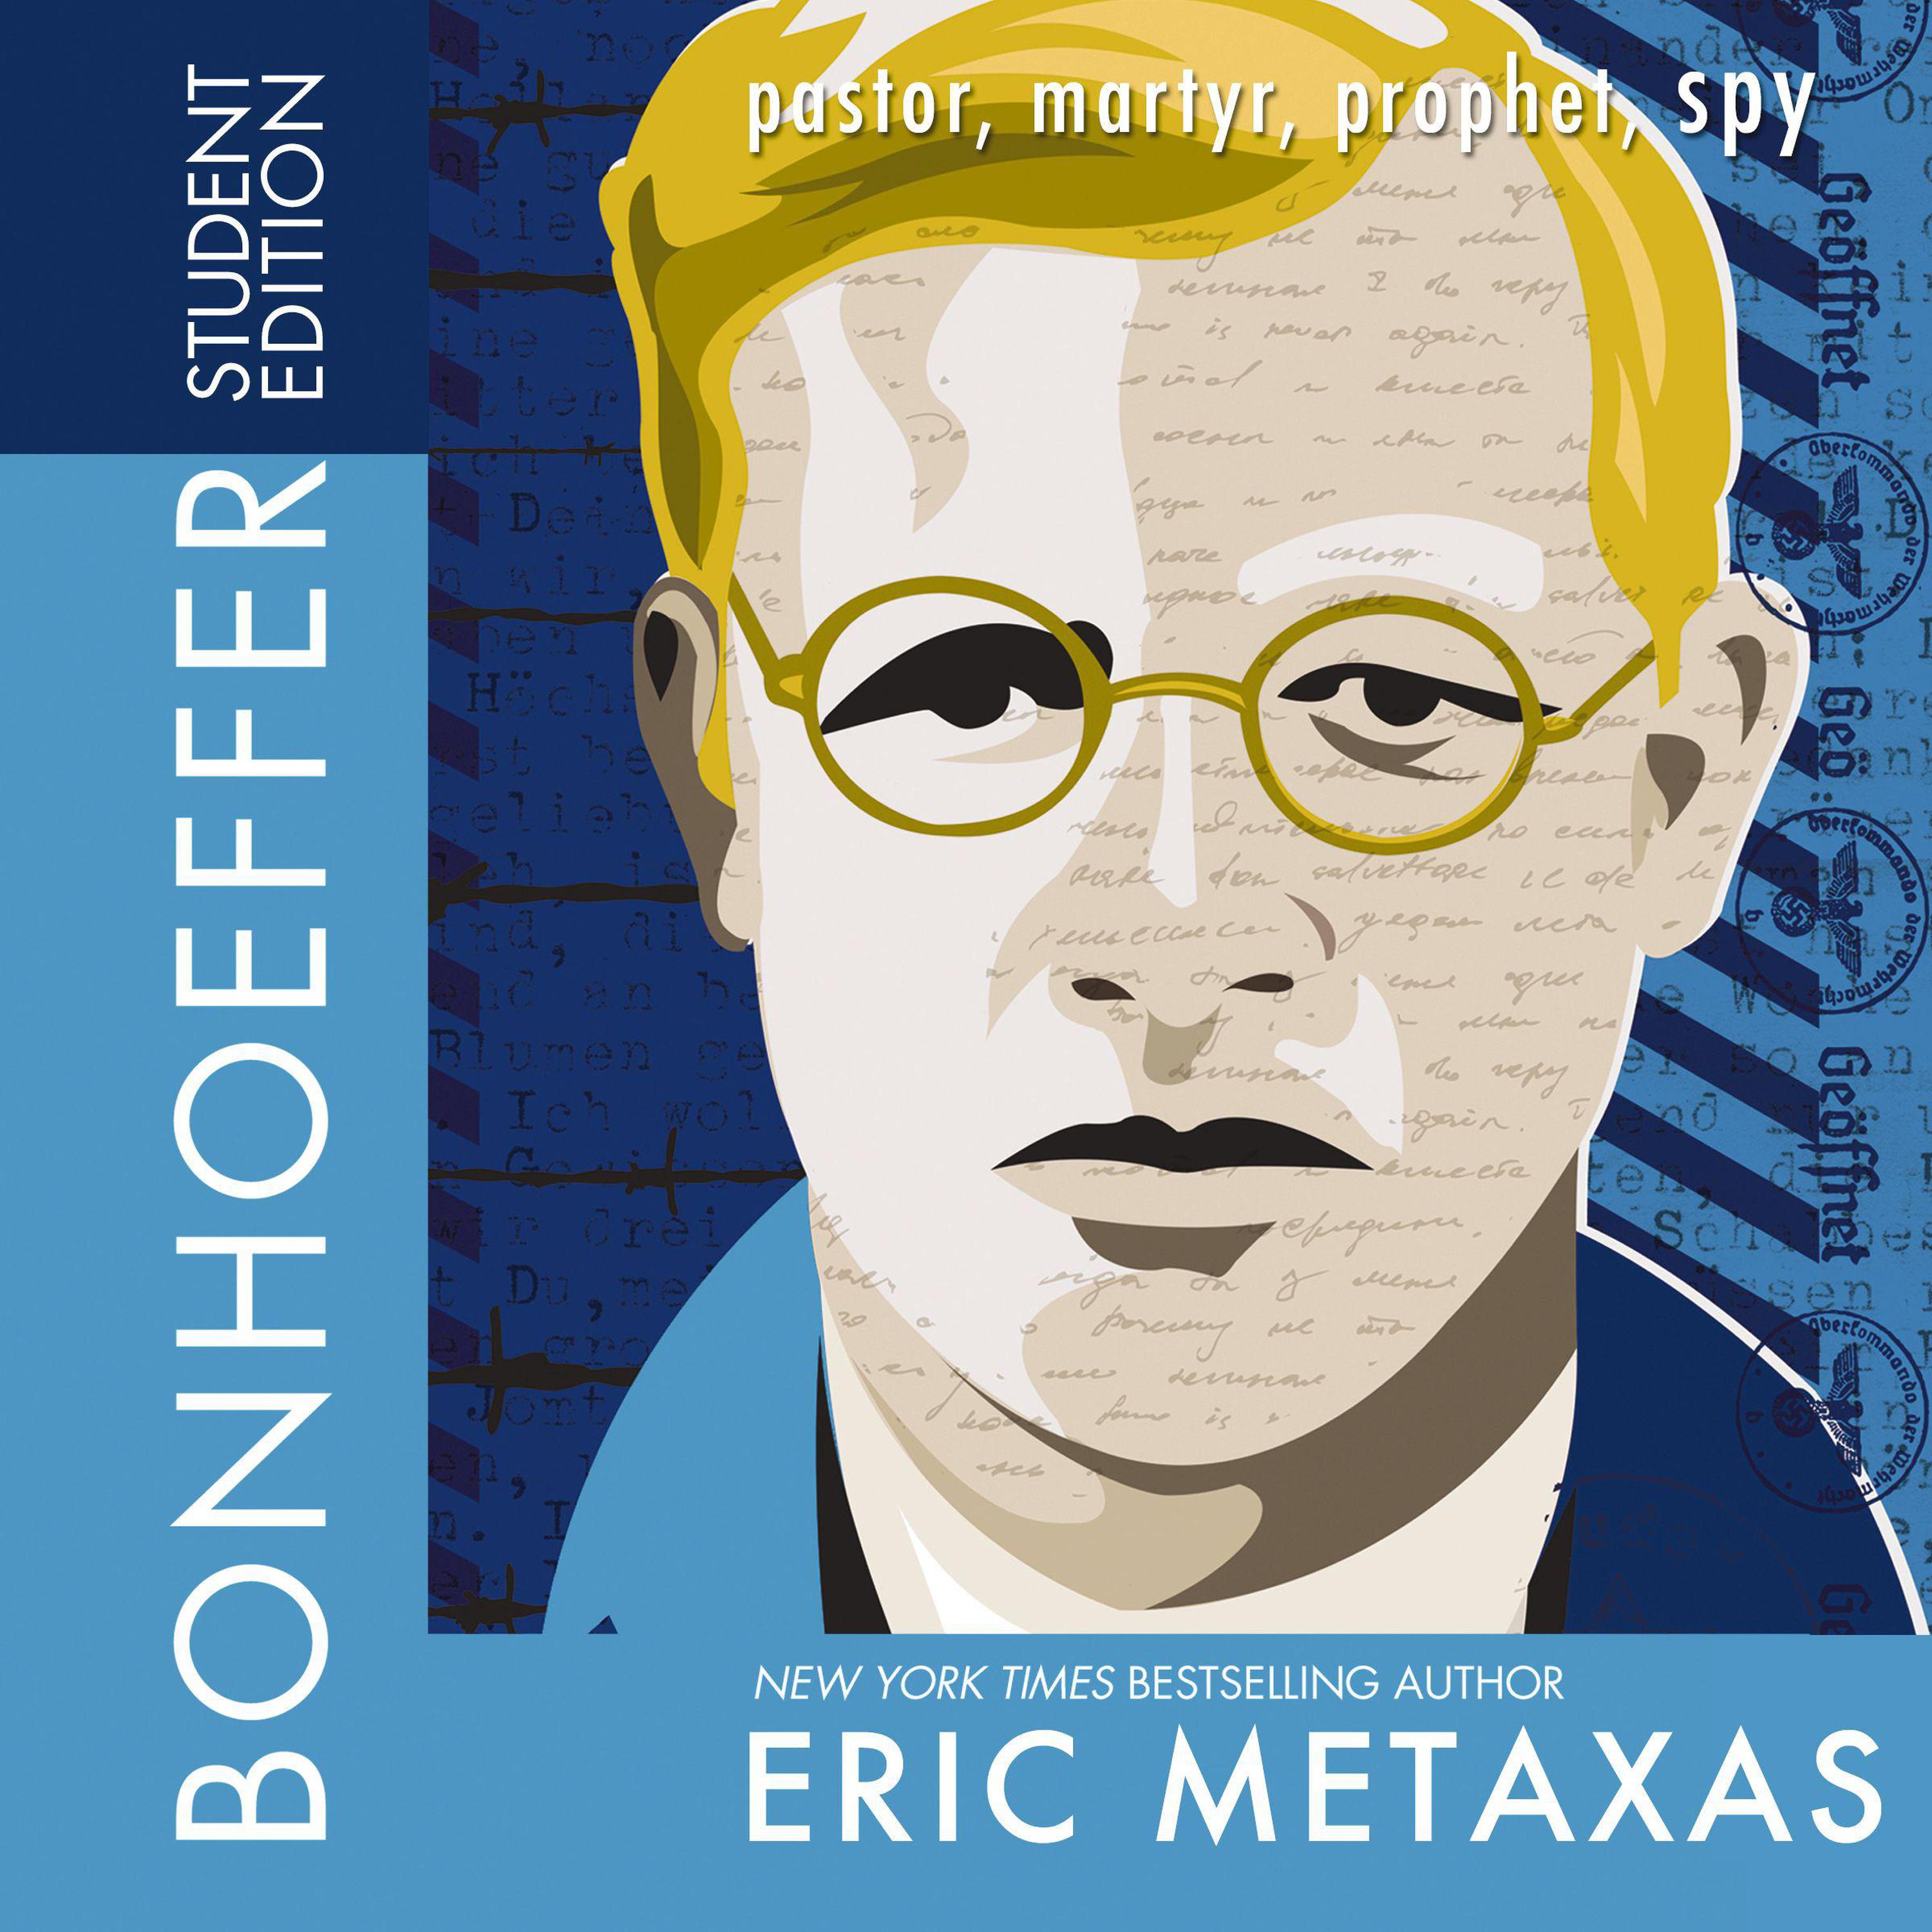 bonhoeffer by eric metaxas